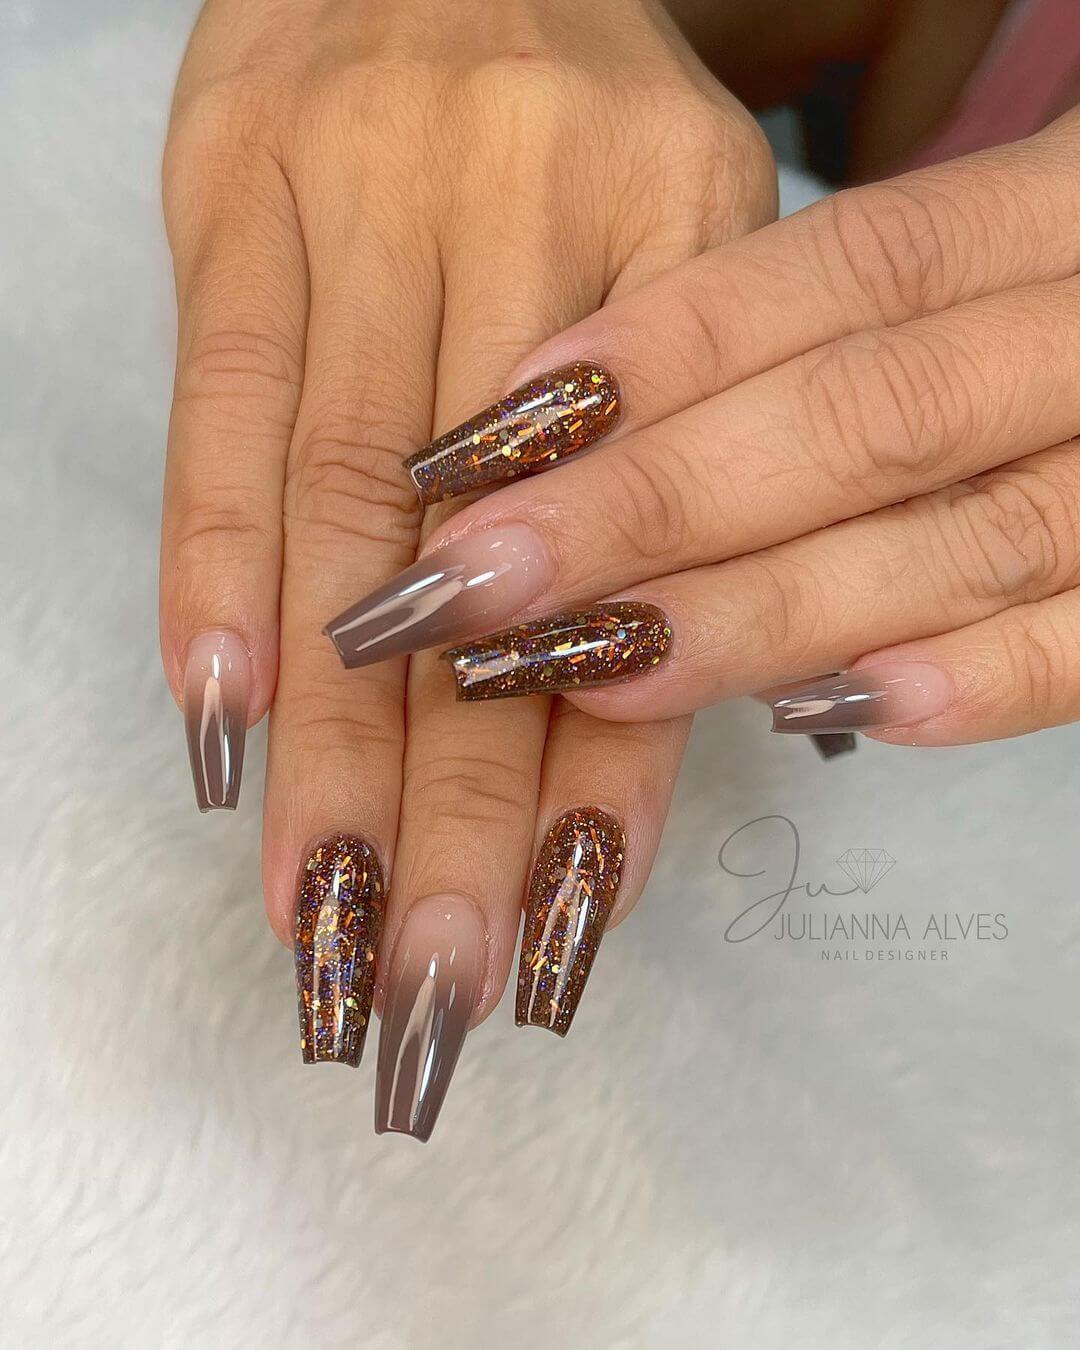 Airbrush nail art design in baby brown